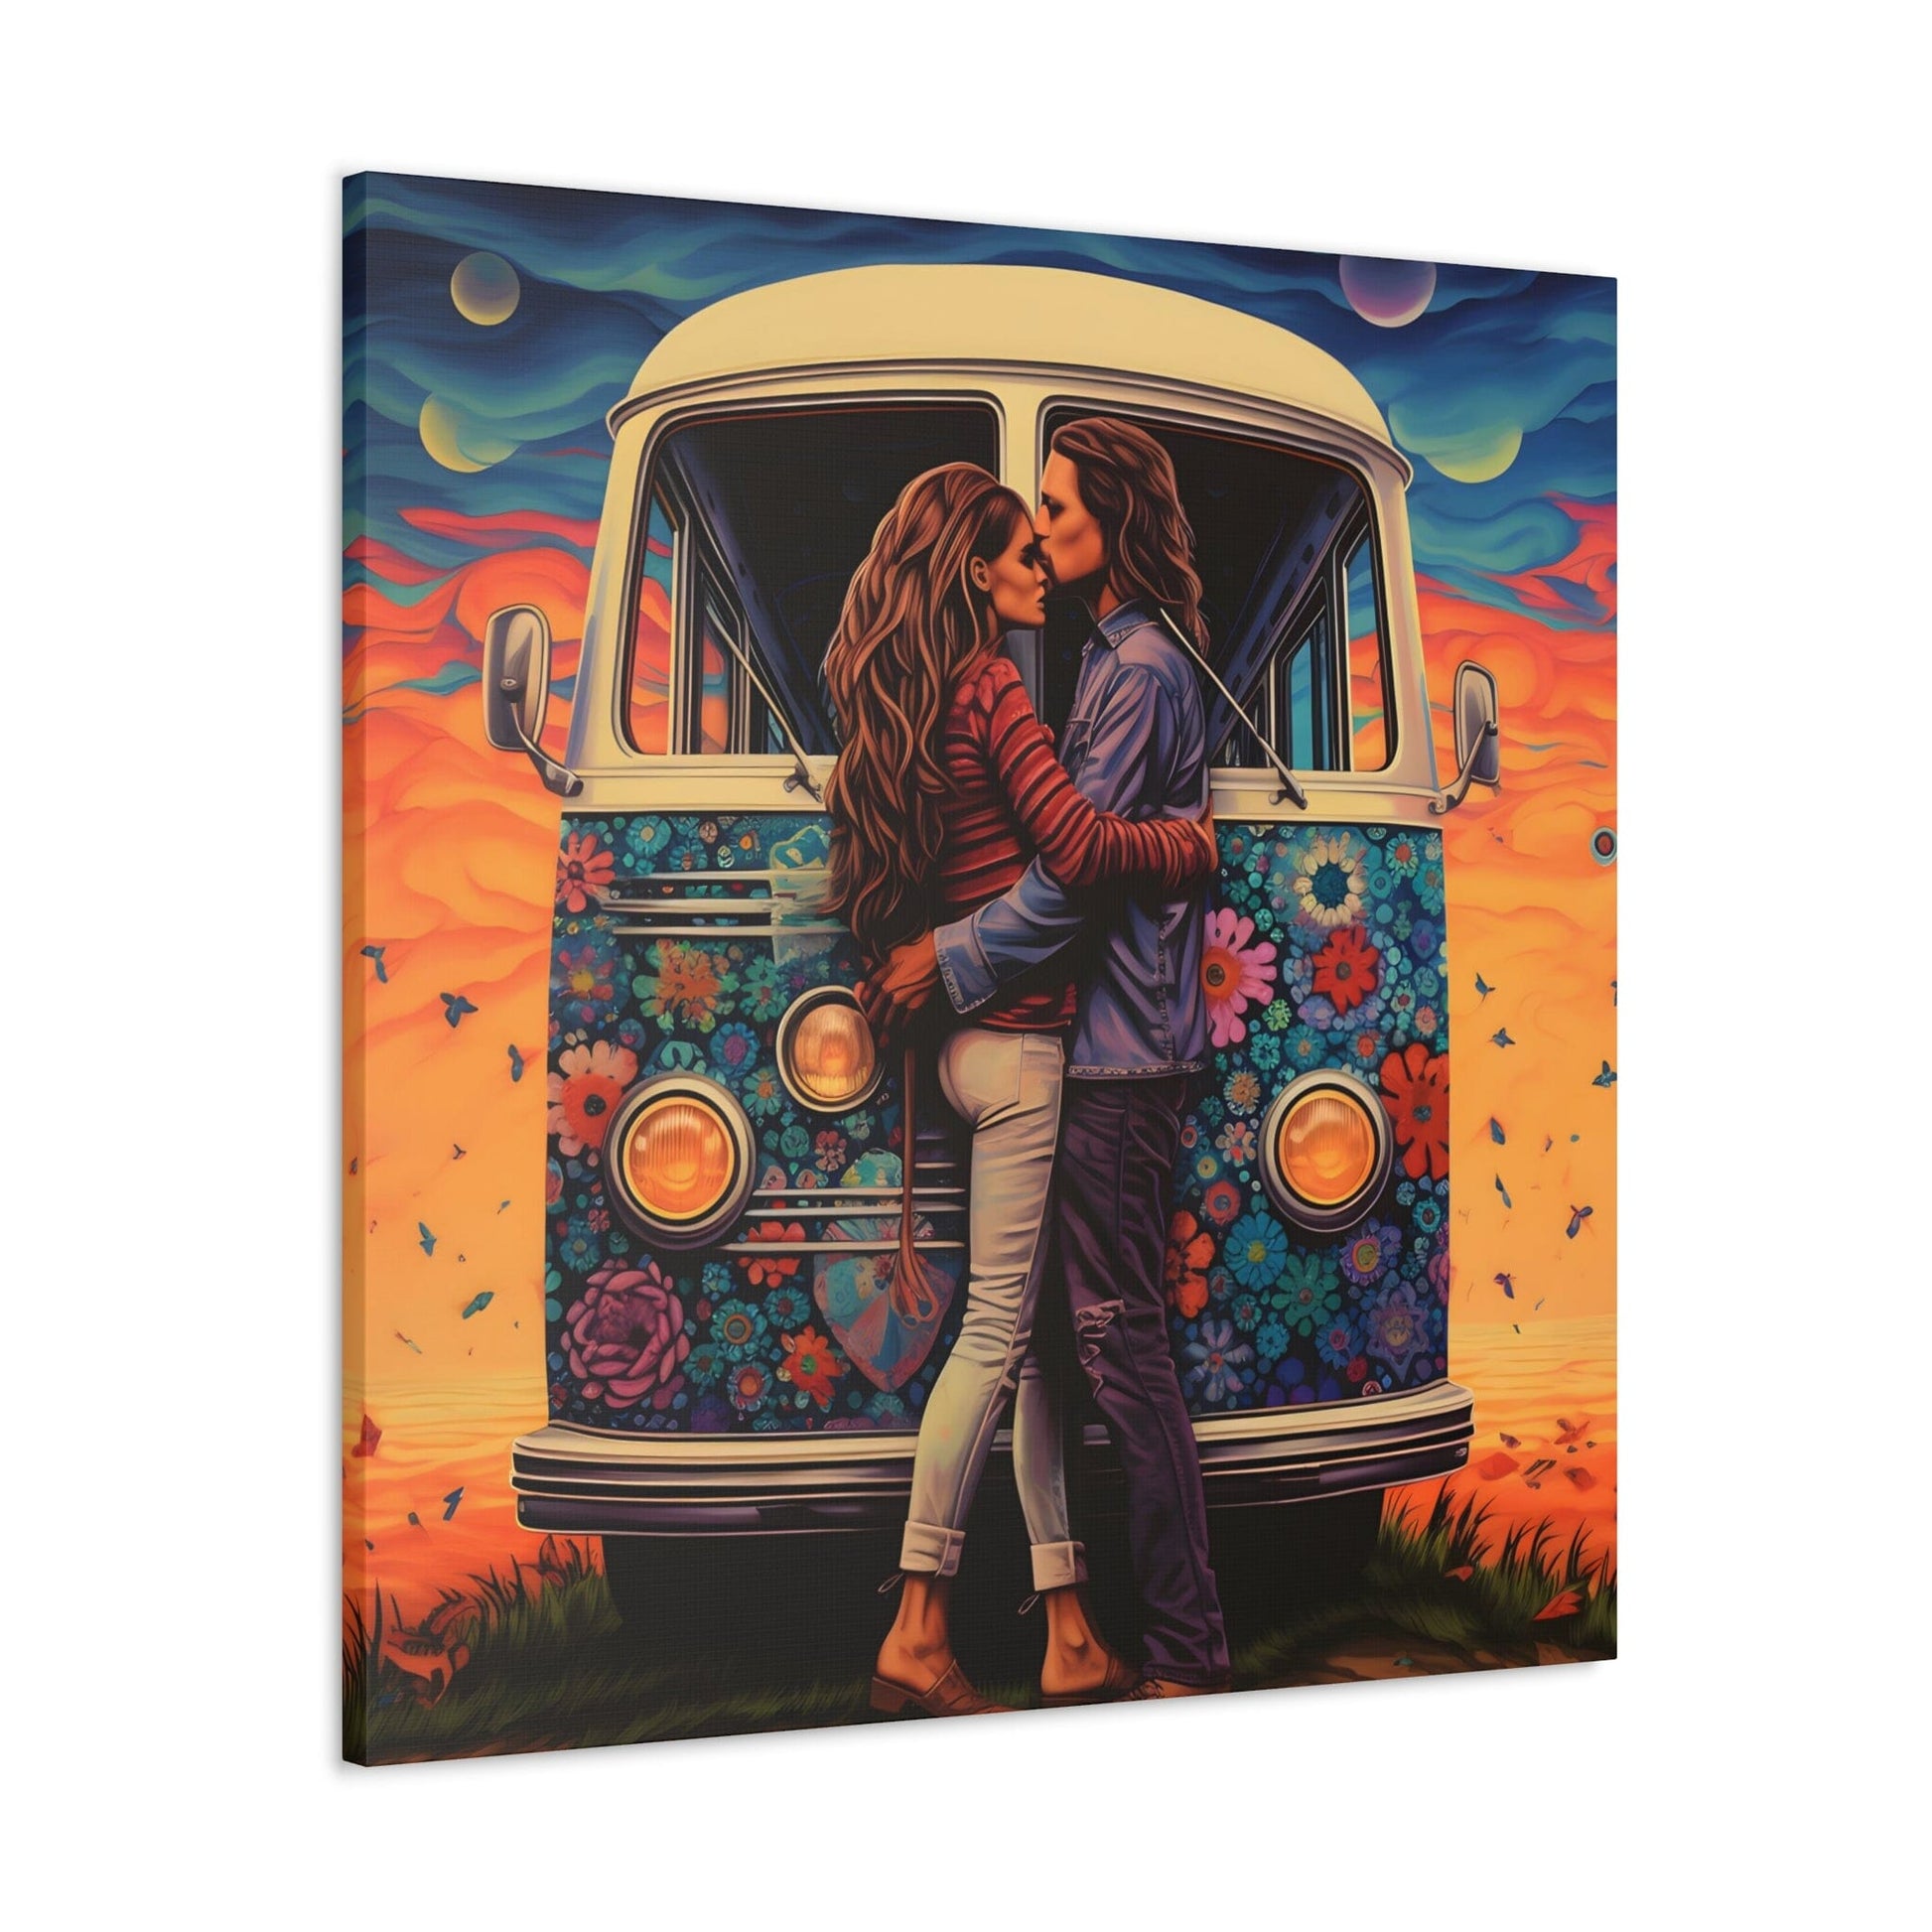 Shane Lucas. Sunset Embrace. Exclusive Canvas Print